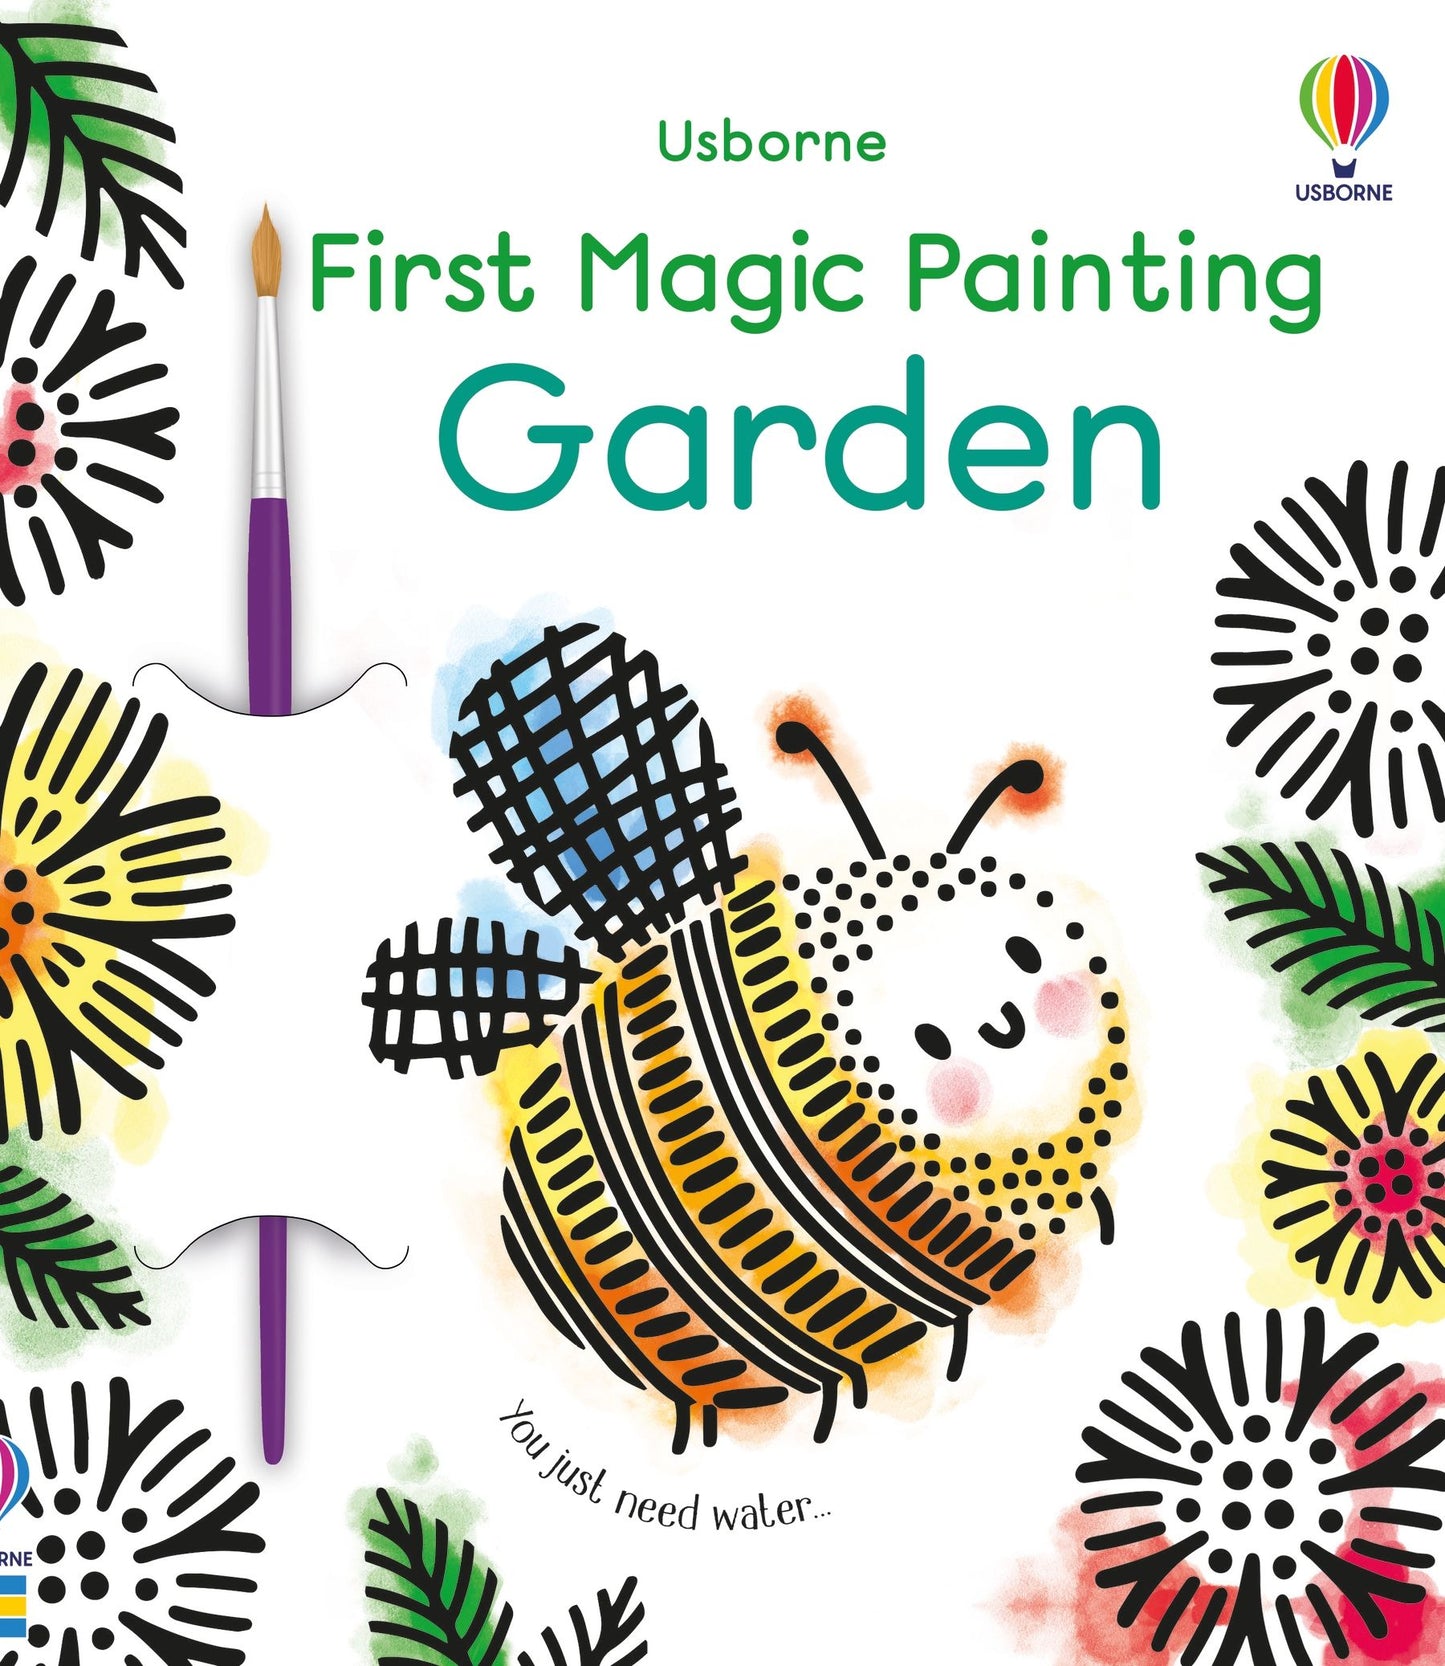 First Magic Painting Garden - Usborne